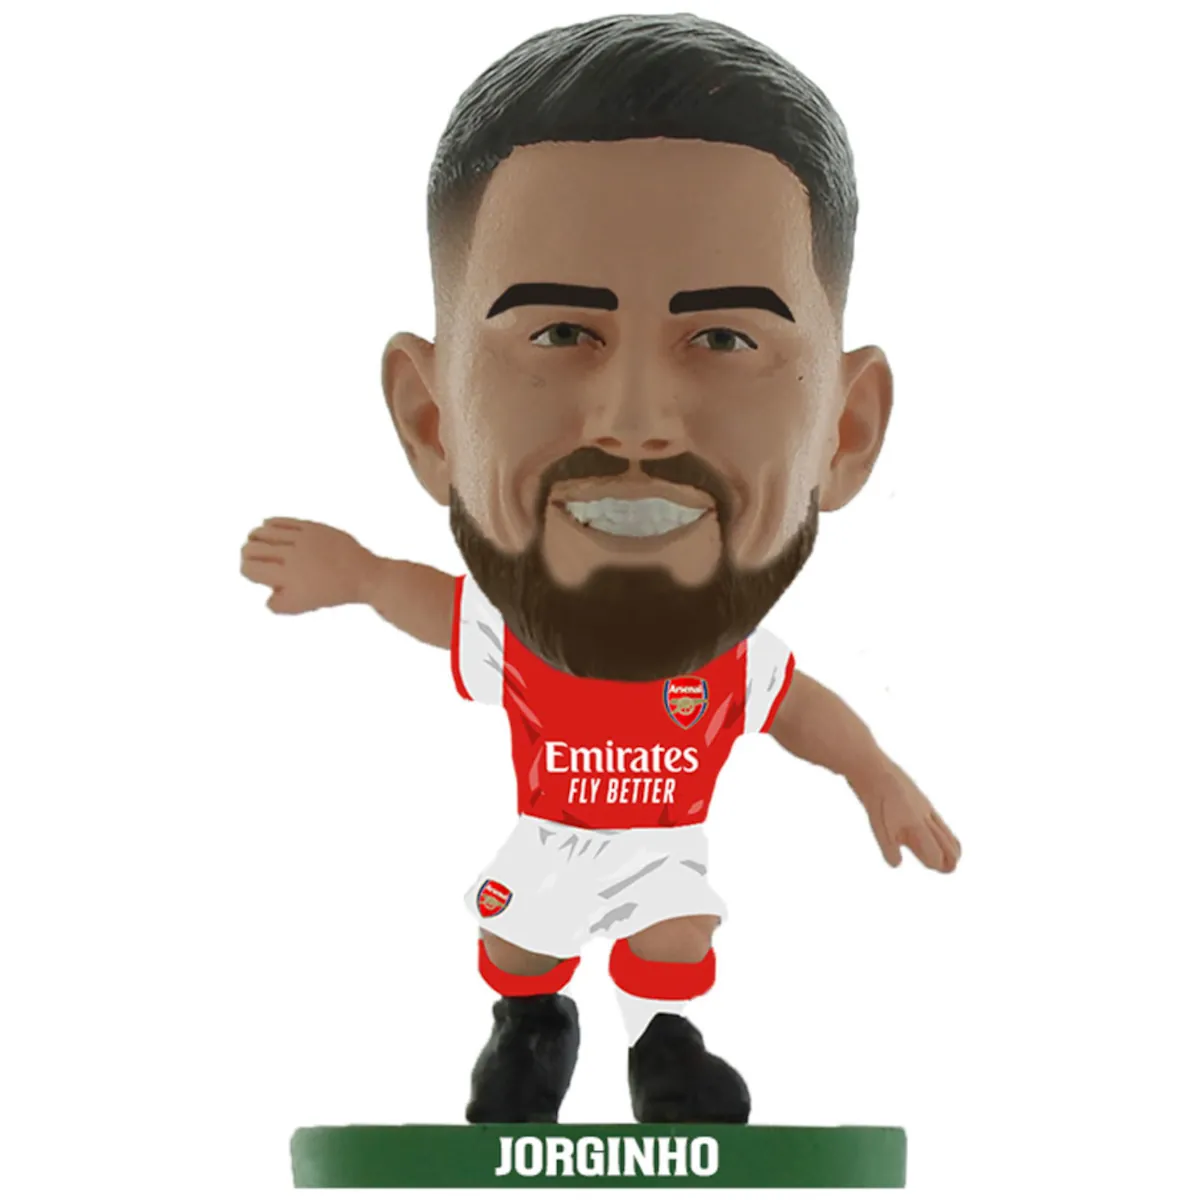 TM-03518 Arsenal FC SoccerStarz Collectable Figure - Jorginho